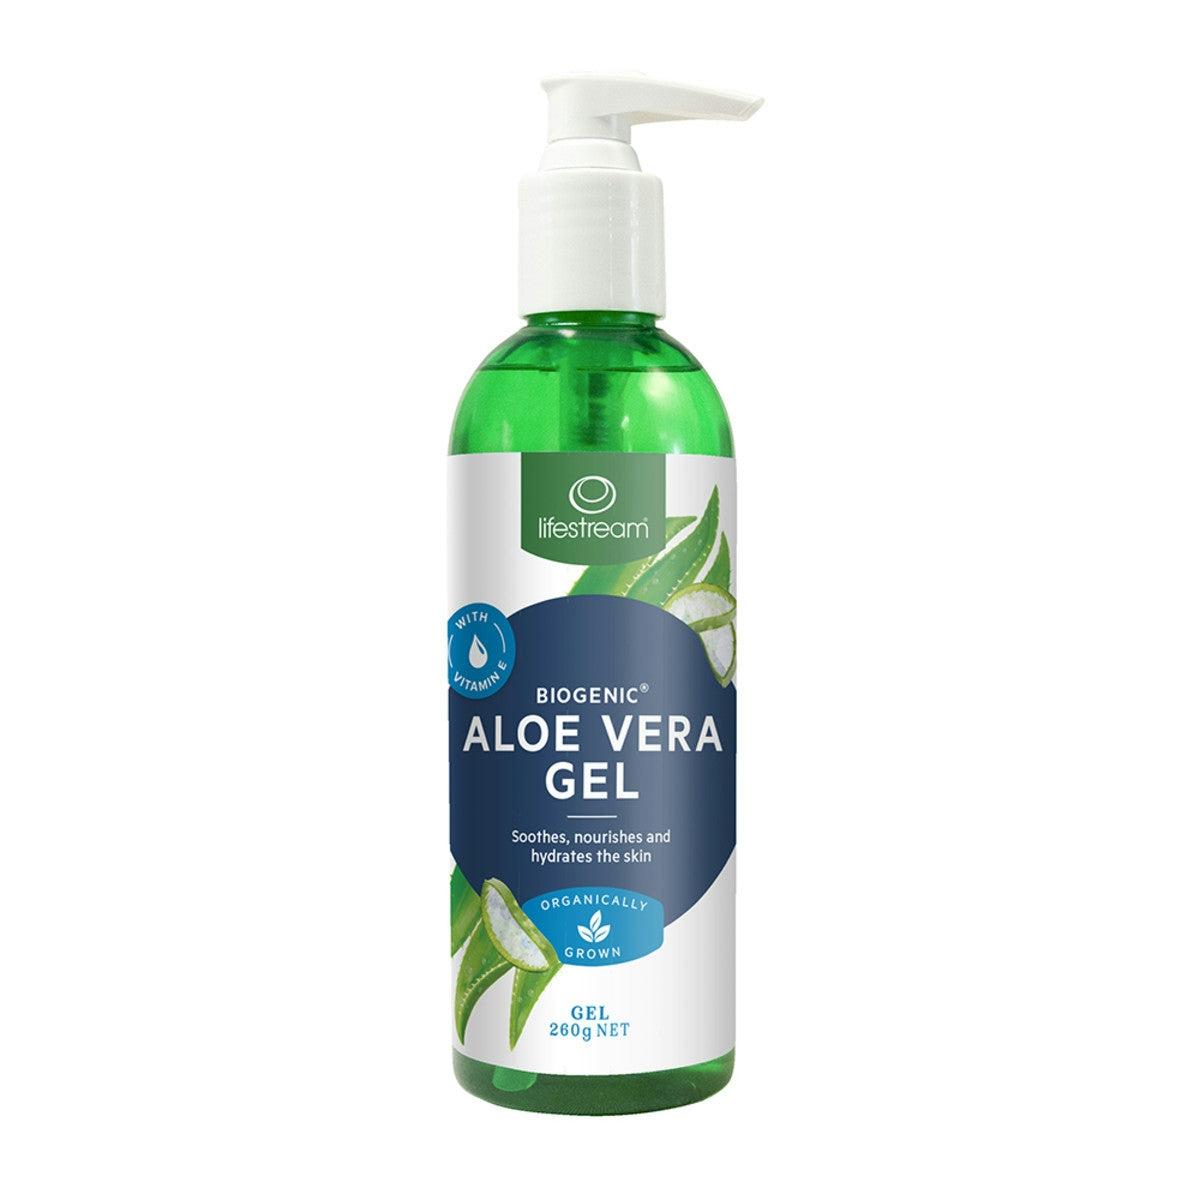 image of LifeStream Biogenic Aloe Vera Gel with Vitamin E 260g Pump on white background 